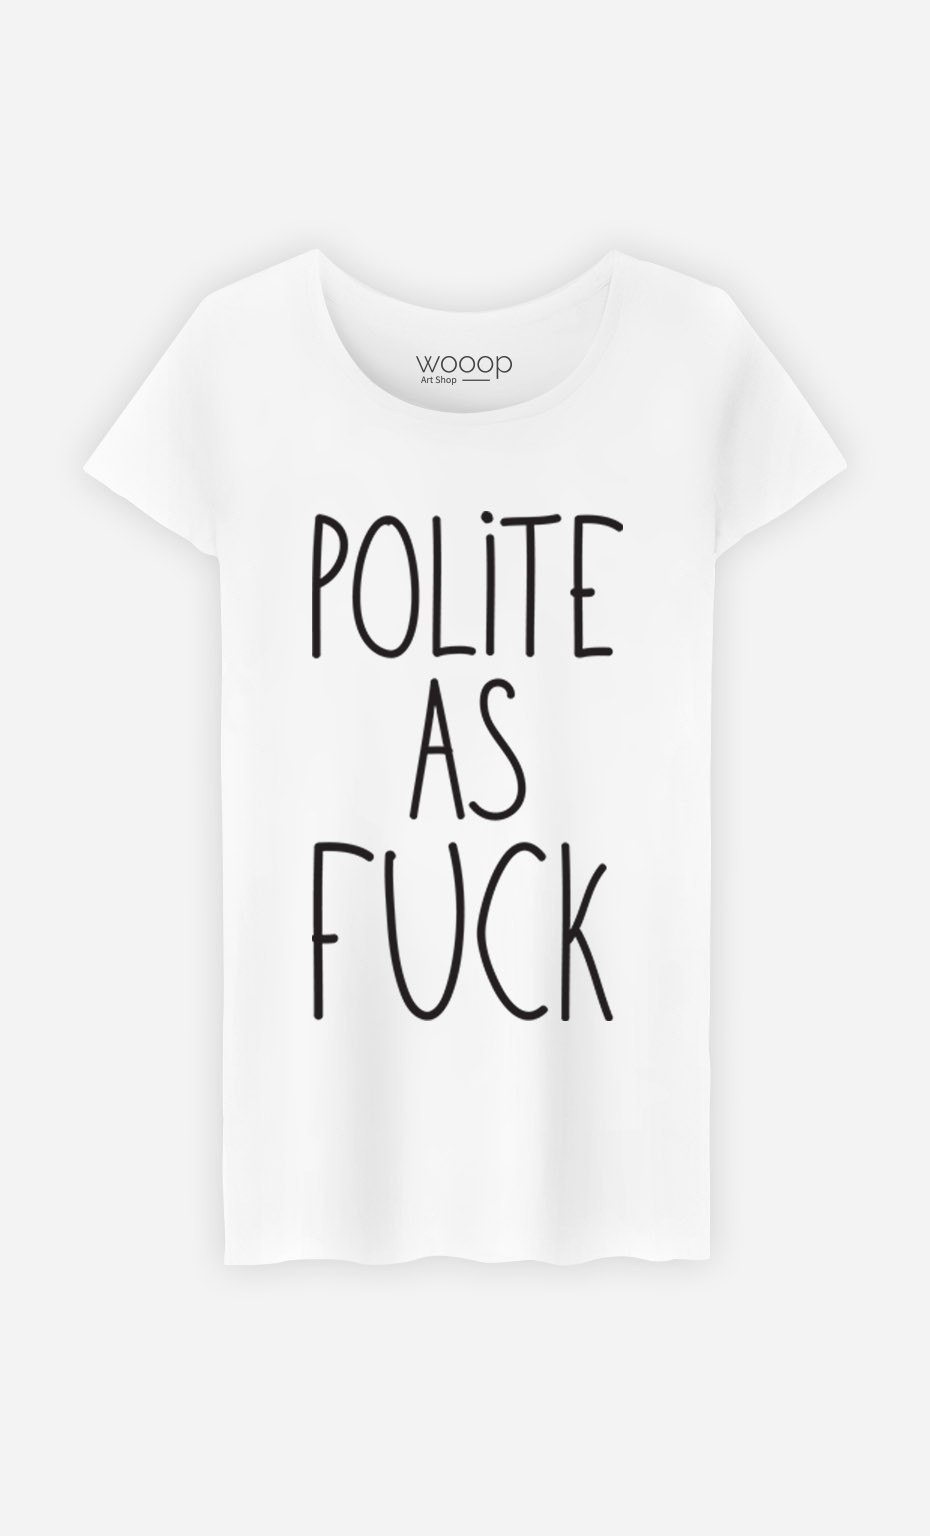 T-Shirt Polite as Fuck